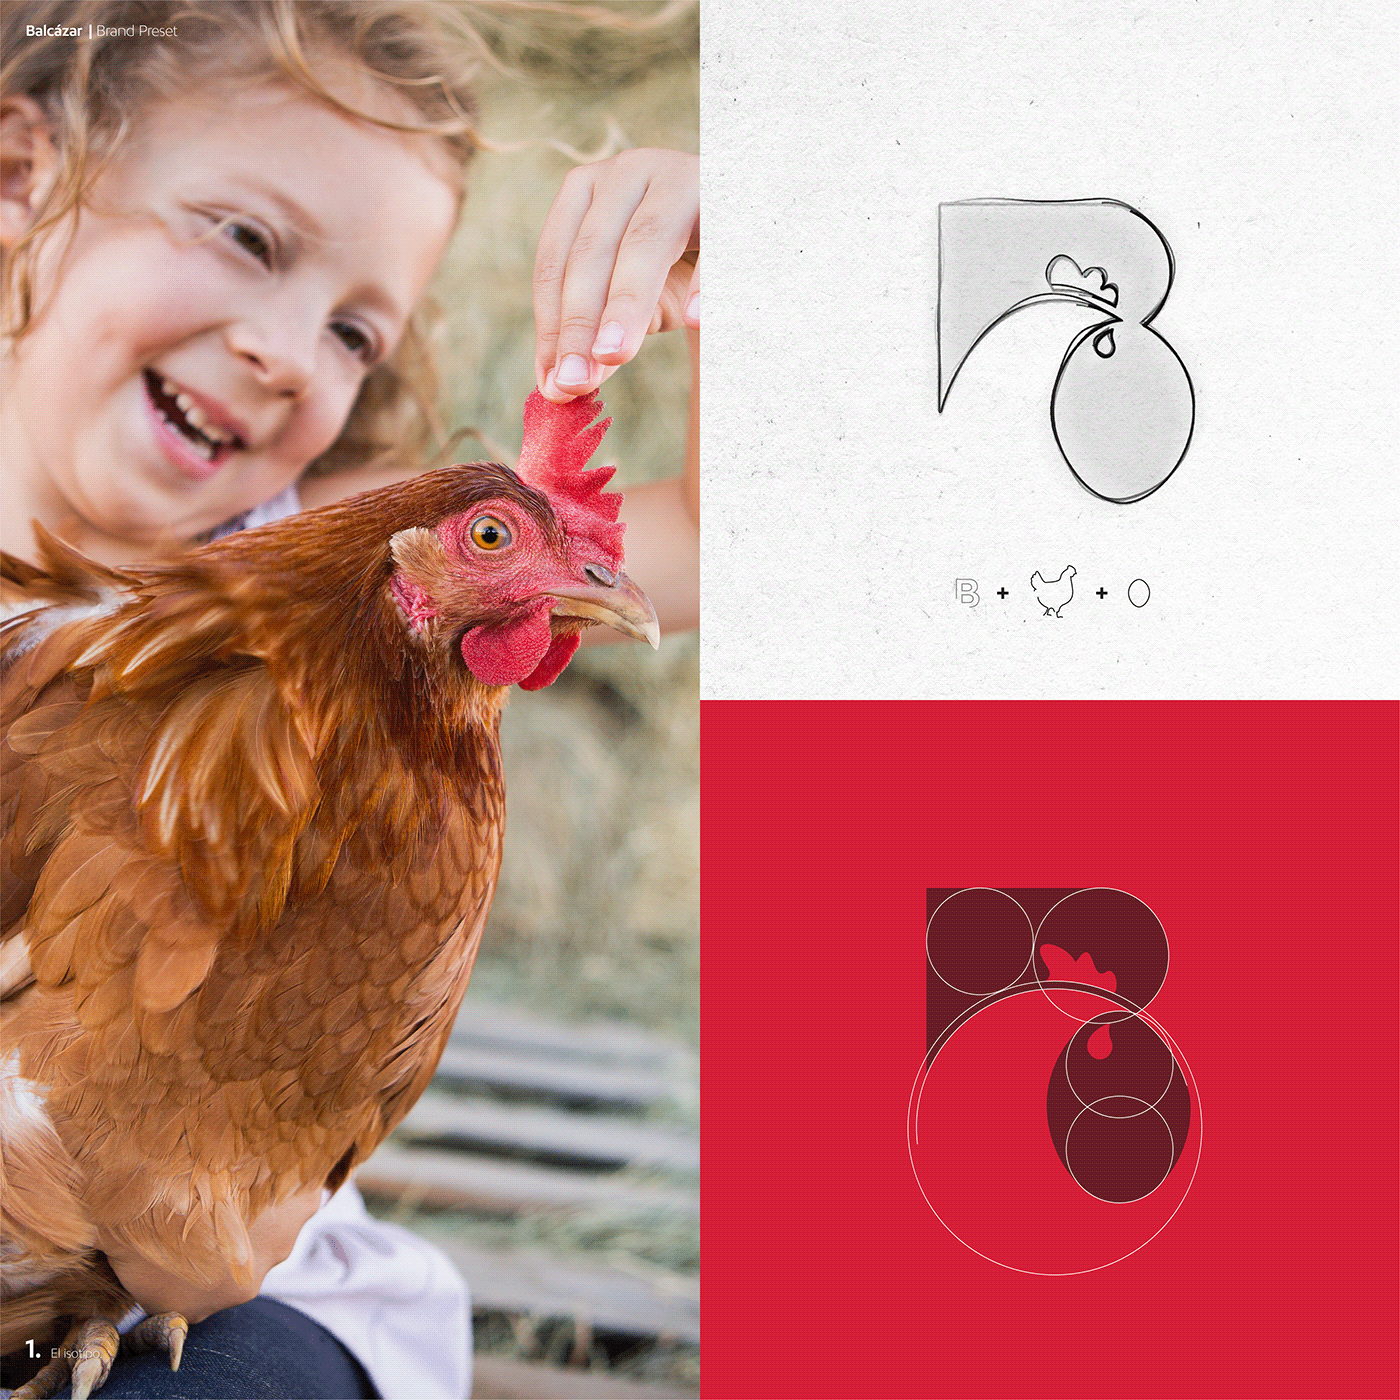 b logo balcazar chicken chicken logo letter b poultry Poultry logo Rooster rooster logo magnobranding